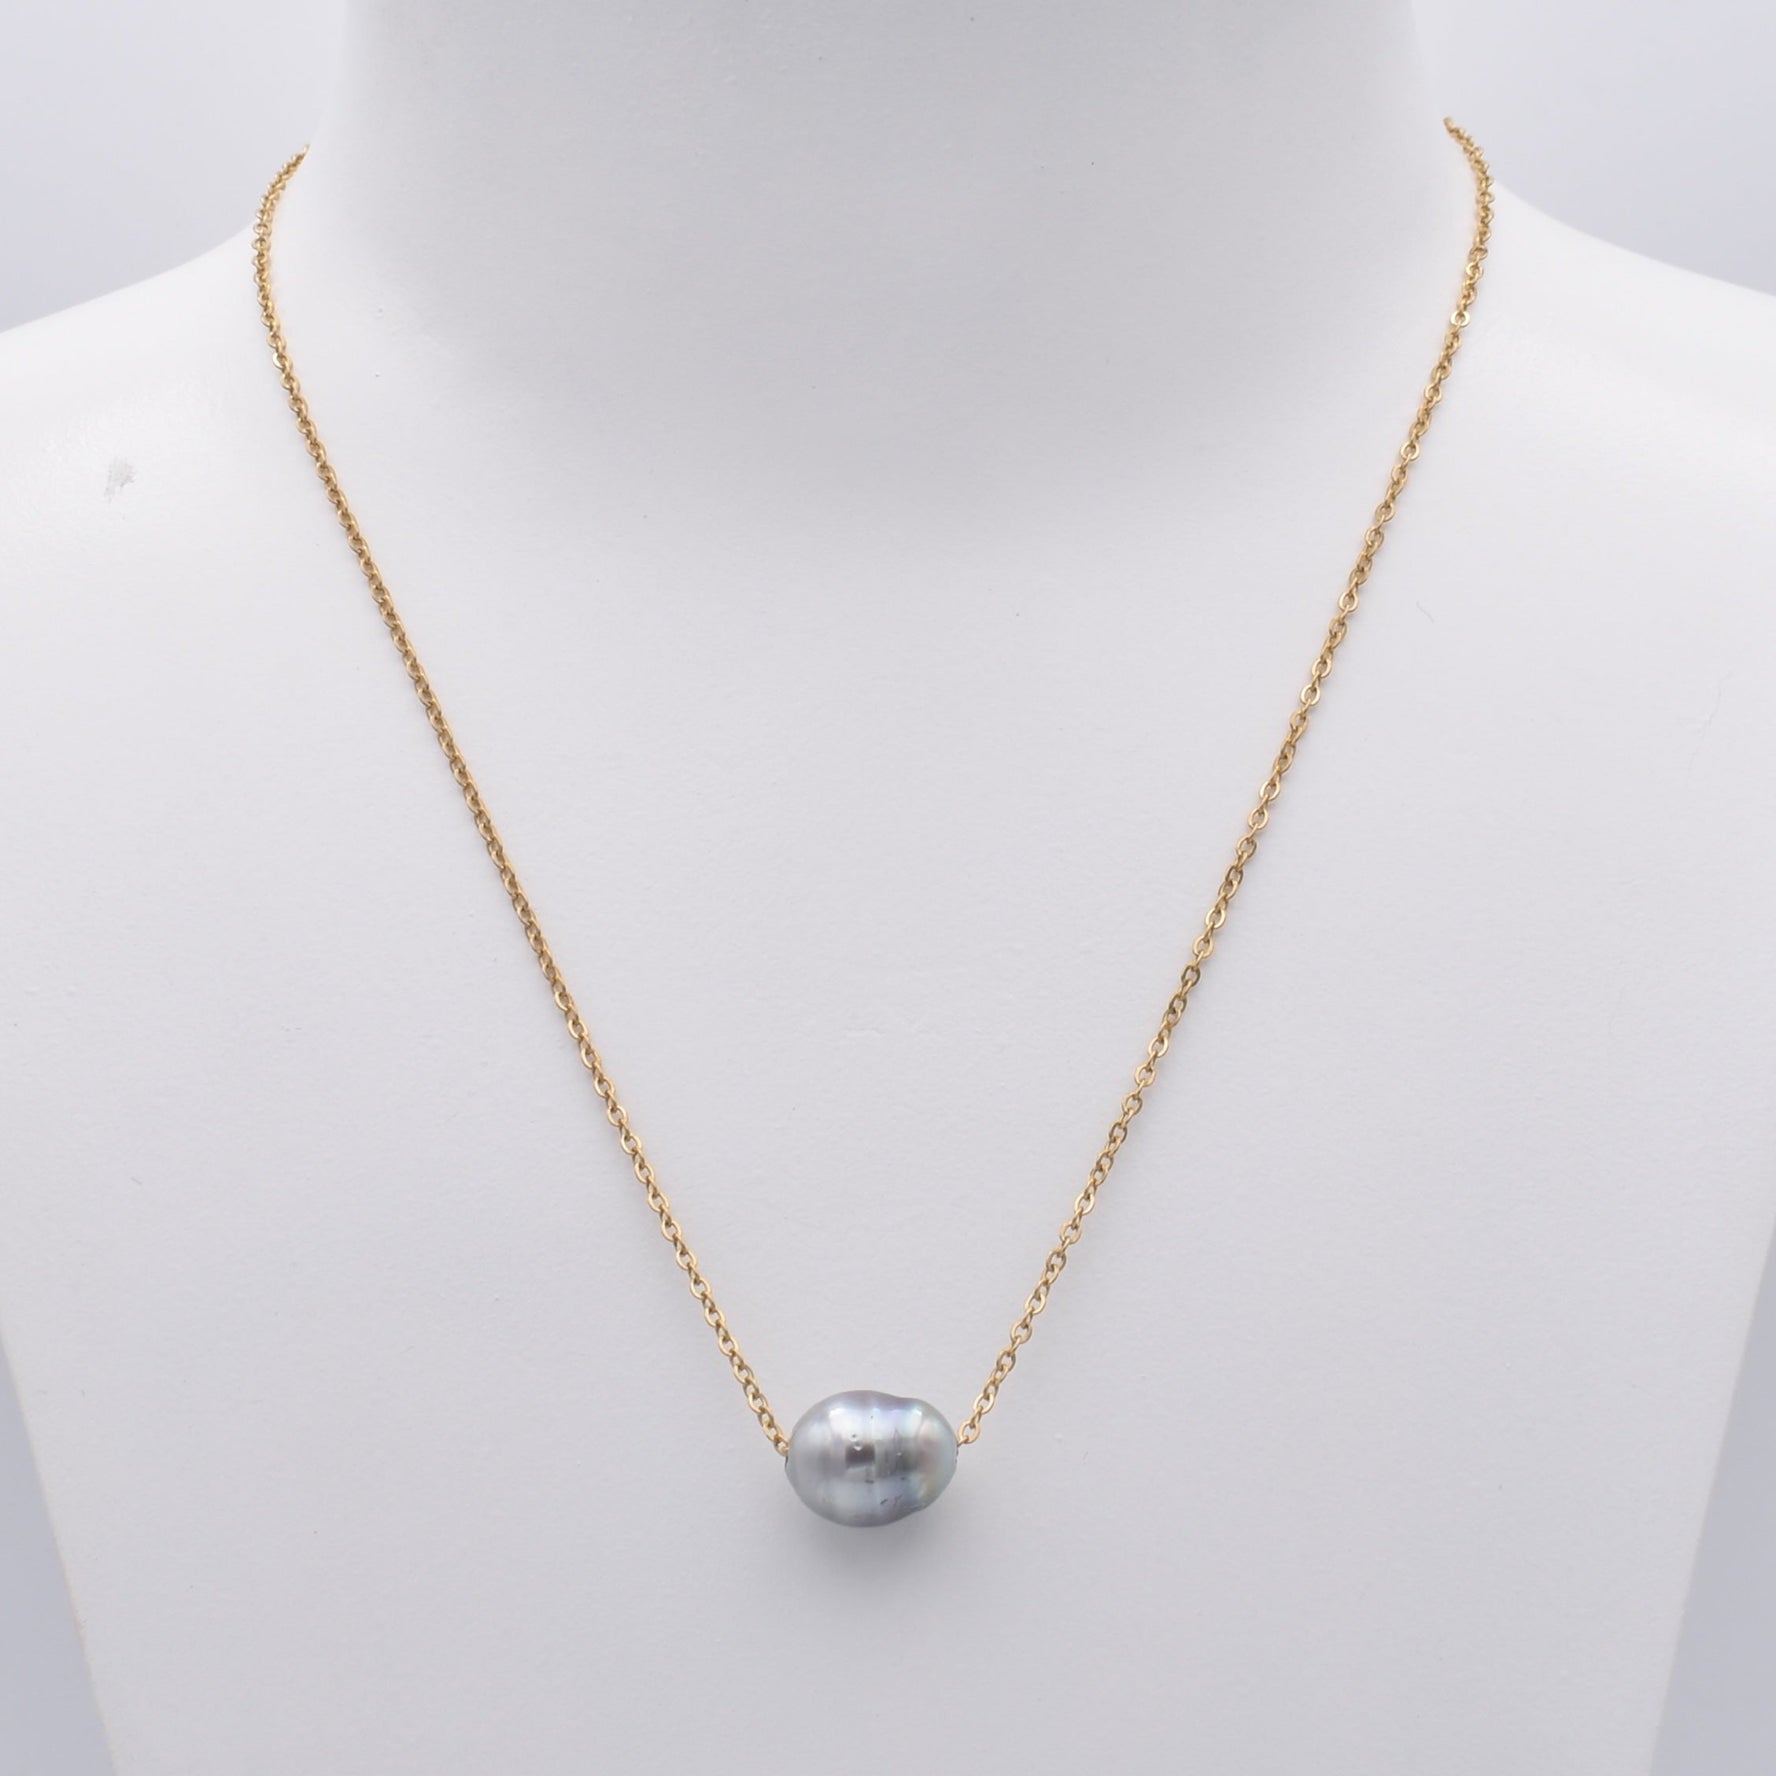 The Classique Gold Lasso Pearl Necklace